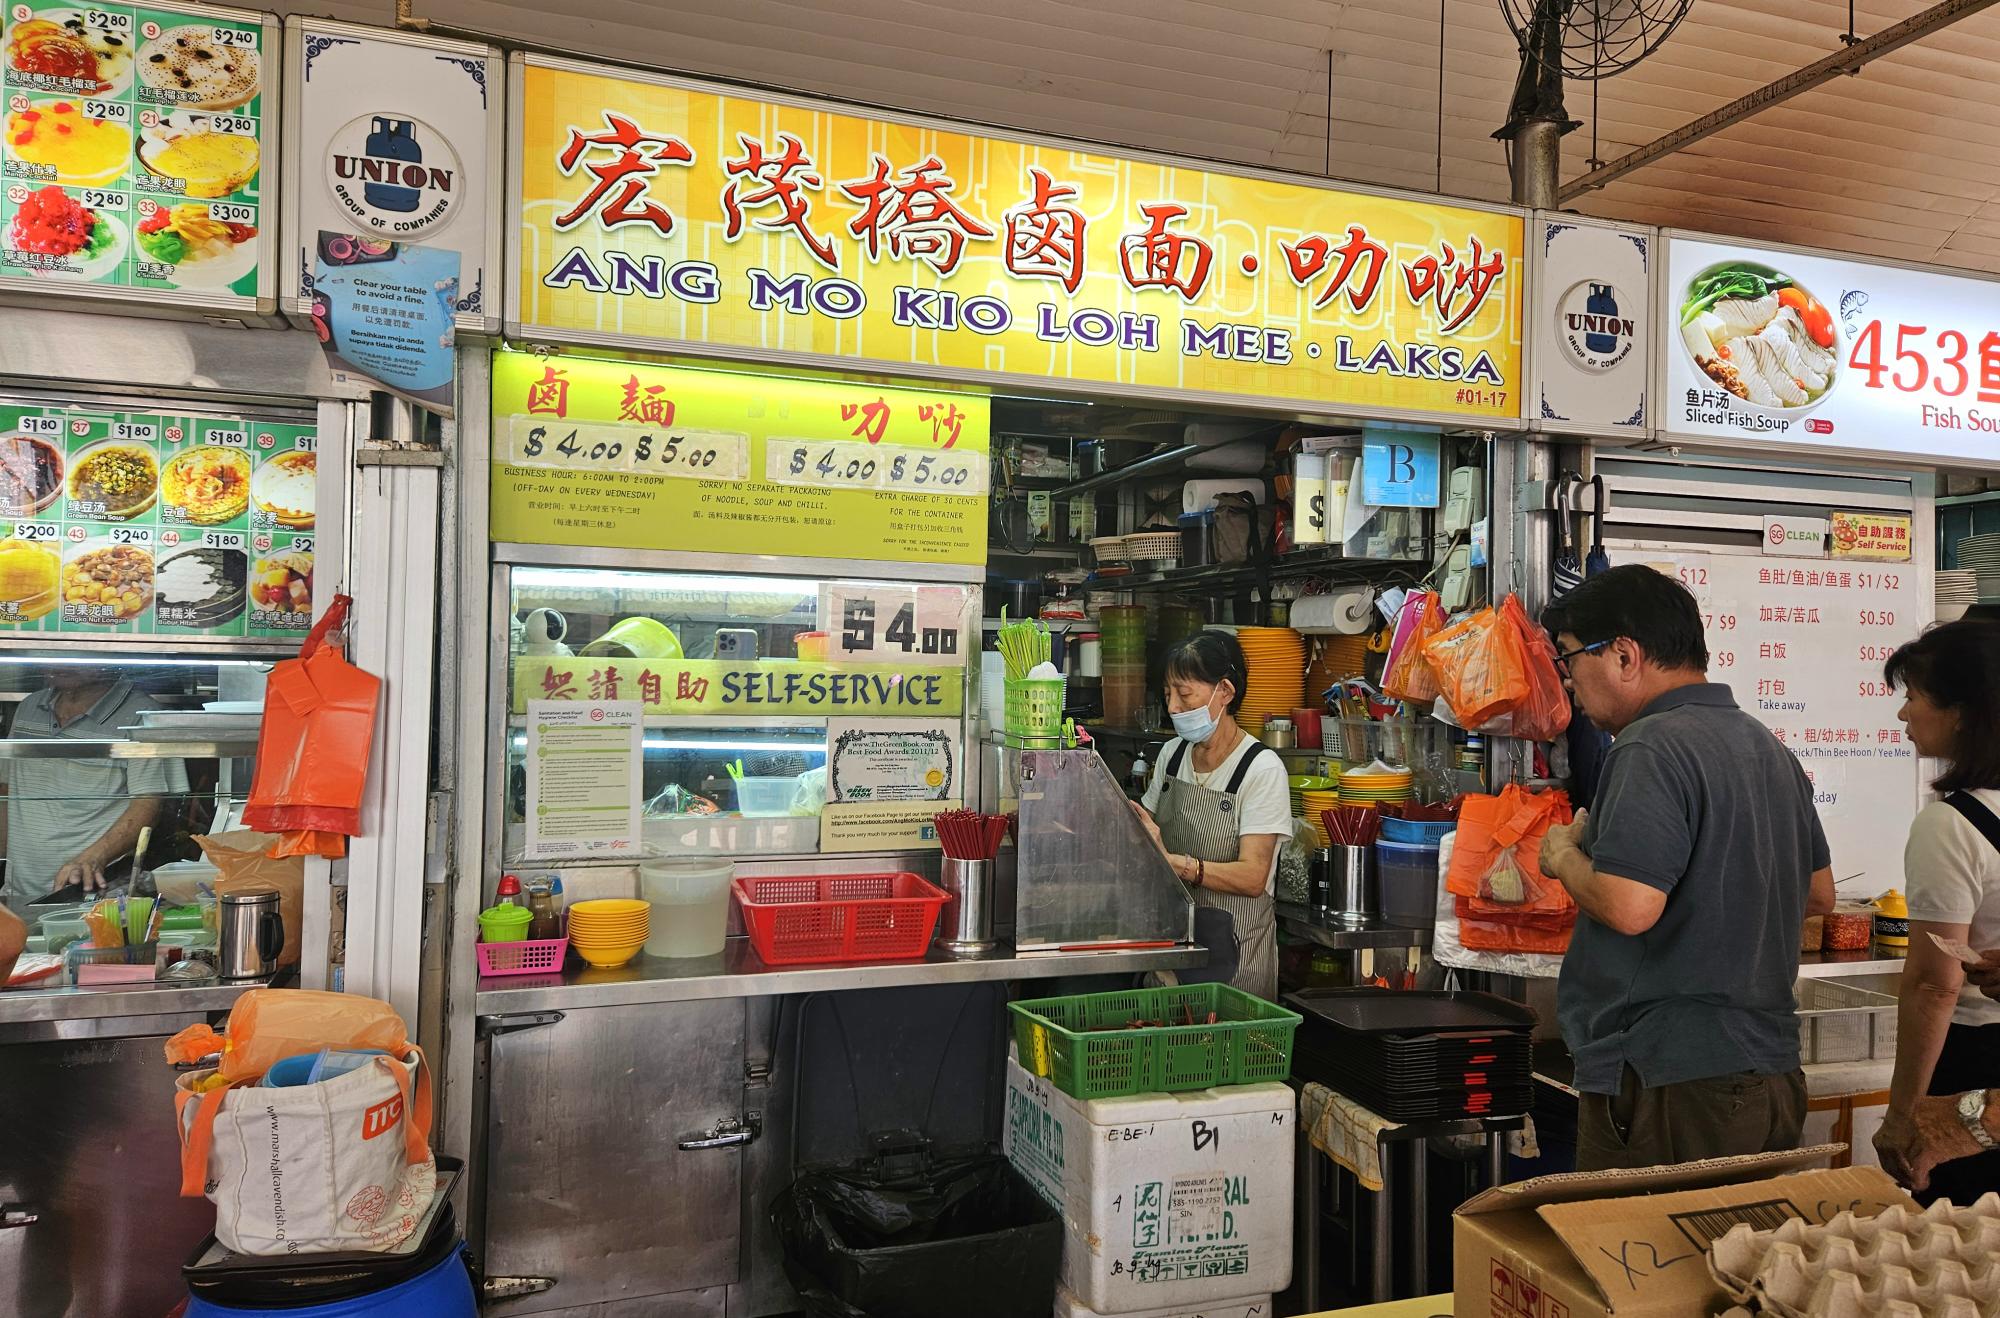 Chong boon market - amk loh mee laksa